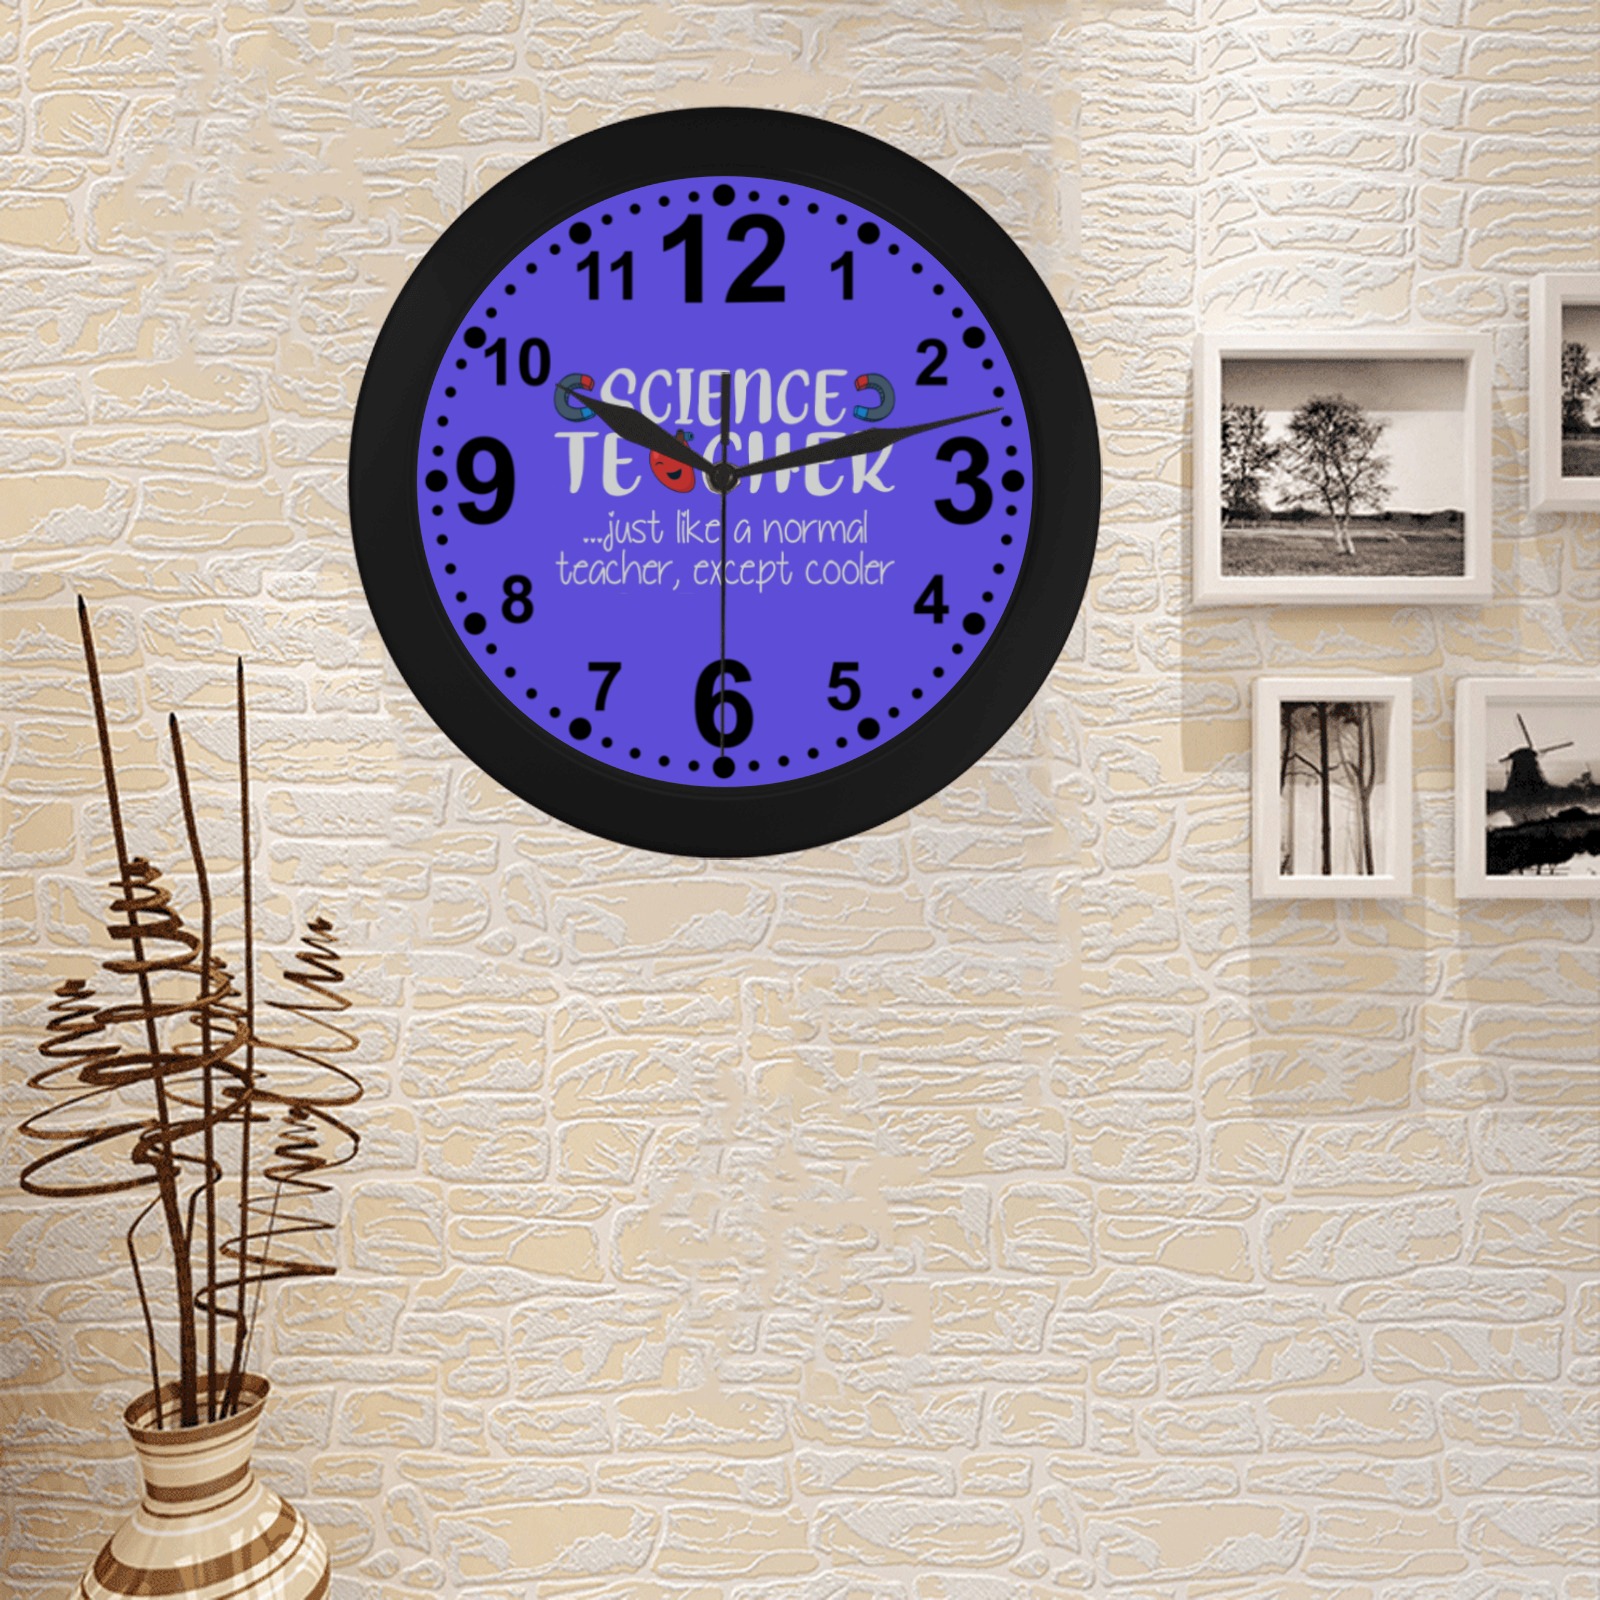 Science Teacher Circular Plastic Wall clock